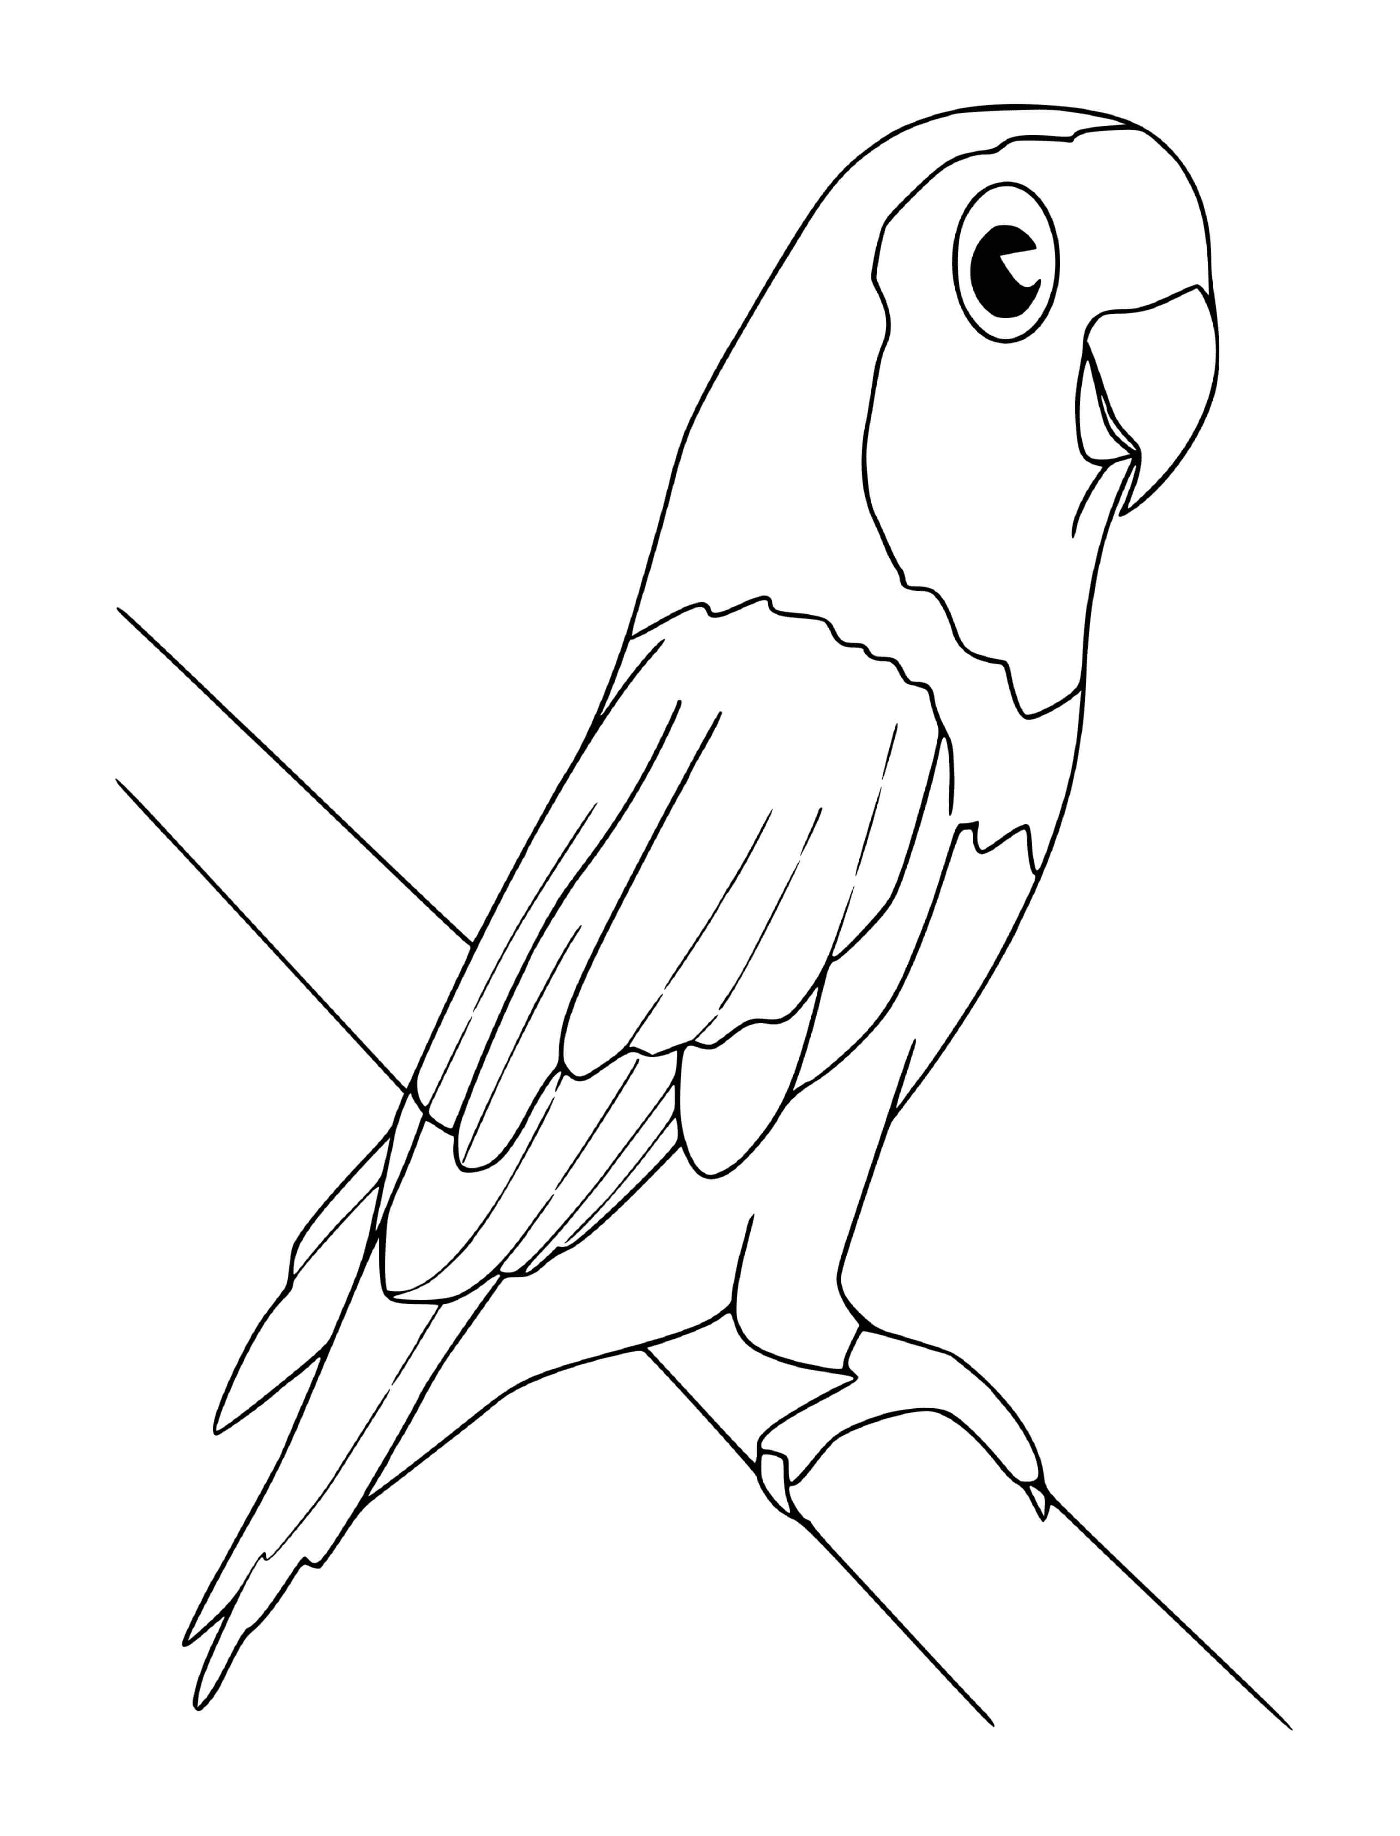  попугай 